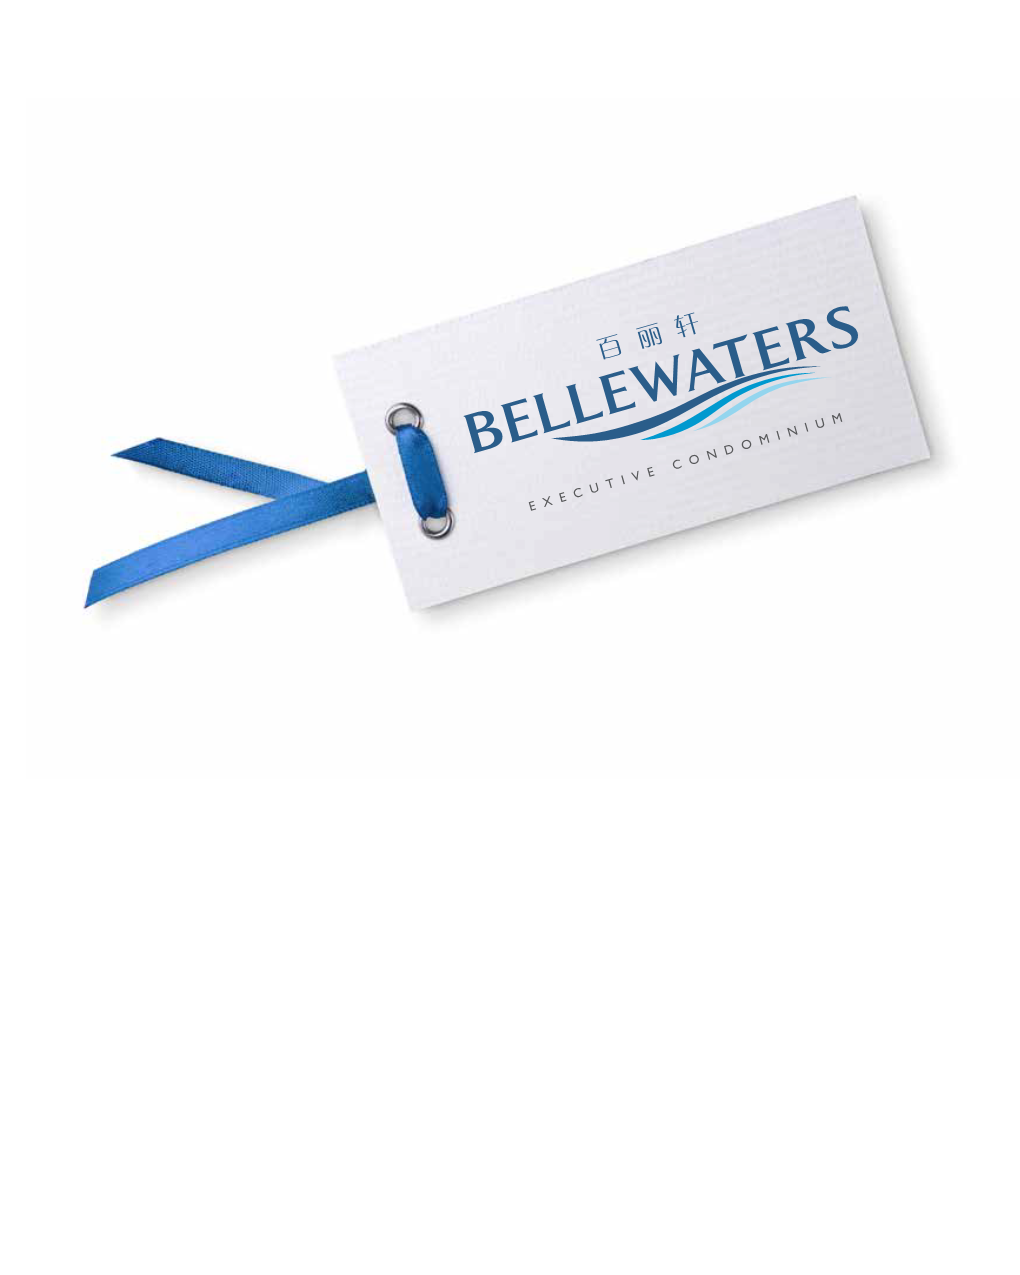 Bellewaters-EC-E-Brochure.Pdf